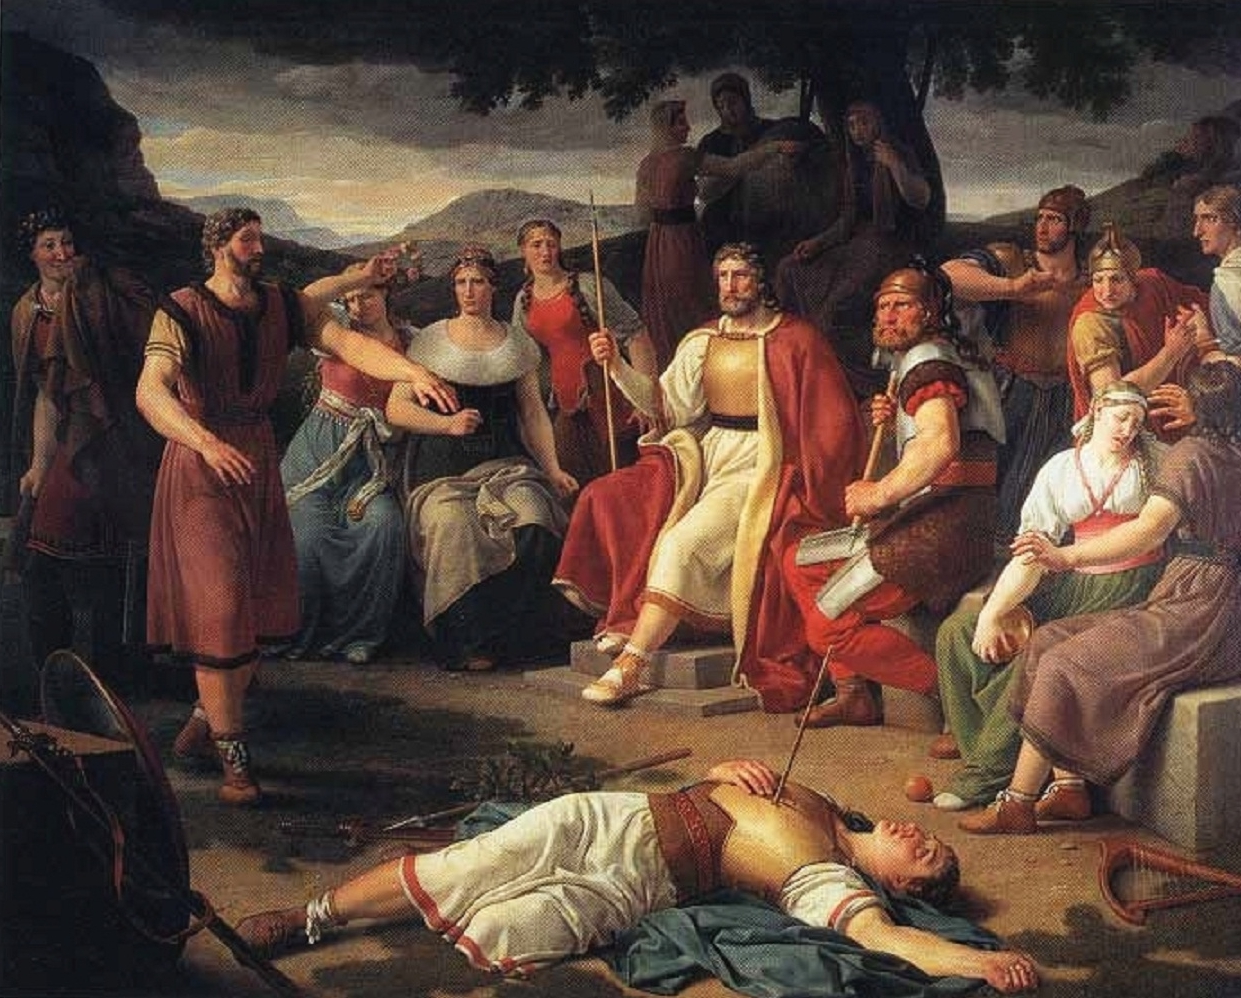 Baldr's Death by Christoffer Wilhelm Eckersberg, 1817